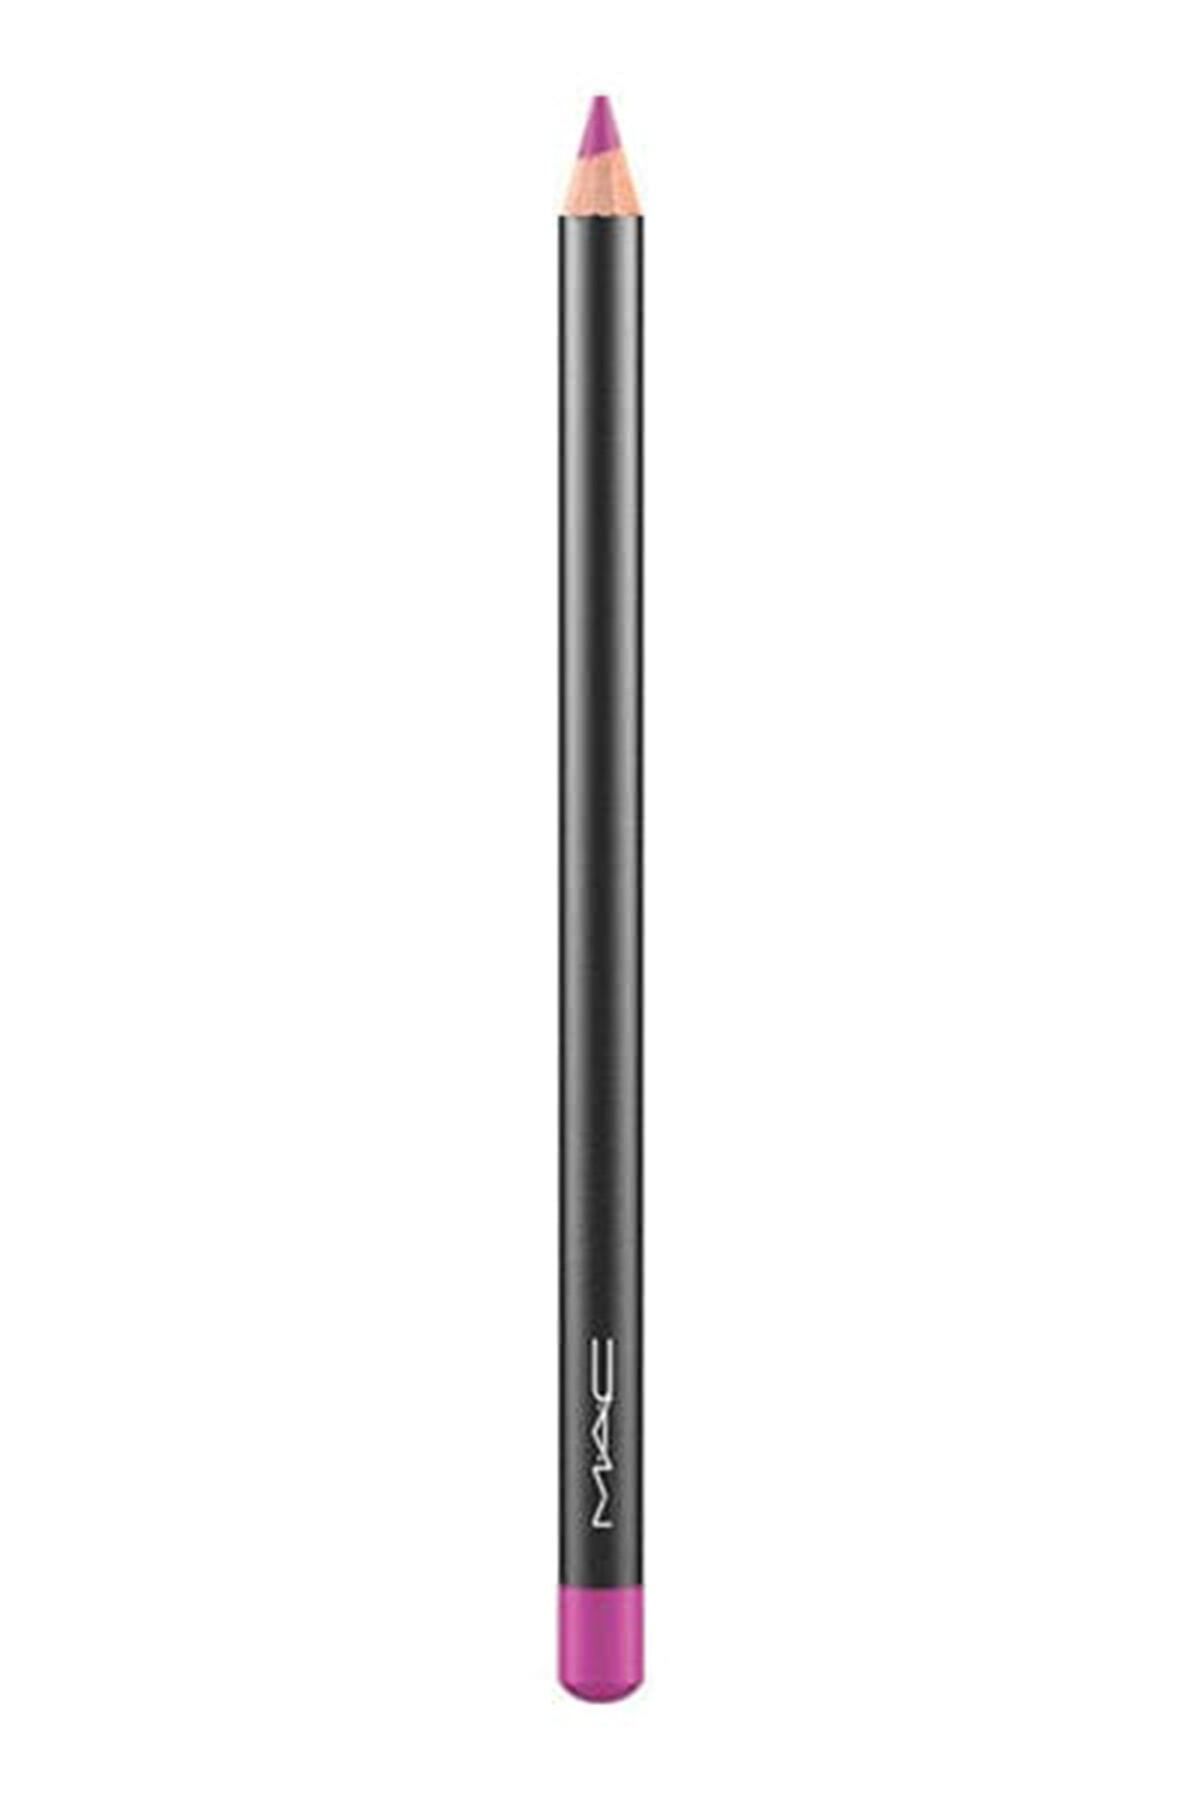 Mac Dudak Kalemi - Lip Pencil  Magenta 1.45 g 773602430055